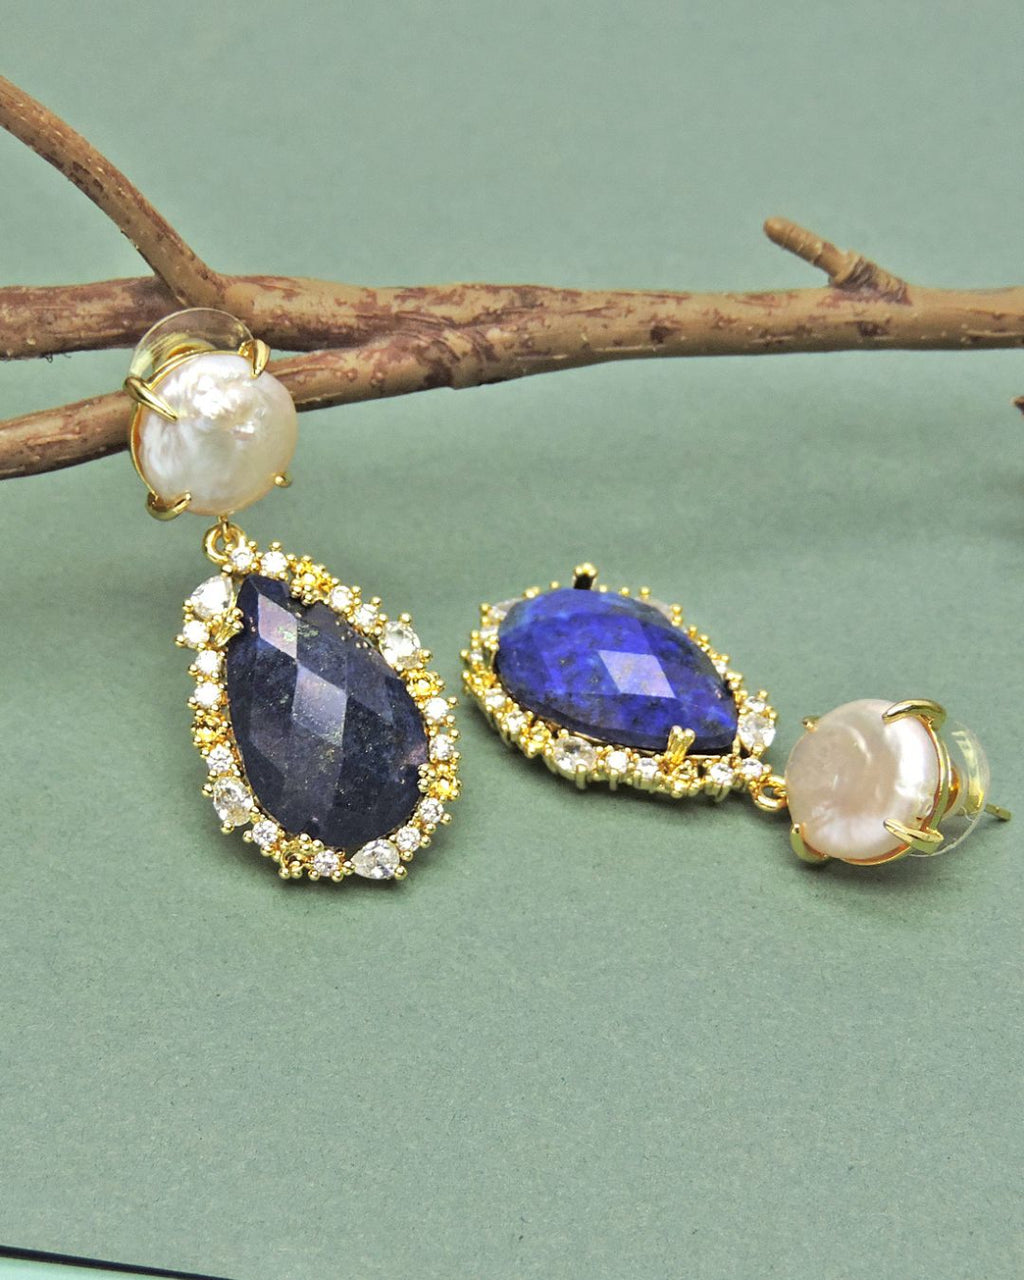 Zobel Earrings - Earrings - Handcrafted Jewellery - Made in India - Dubai Jewellery, Fashion & Lifestyle - Dori